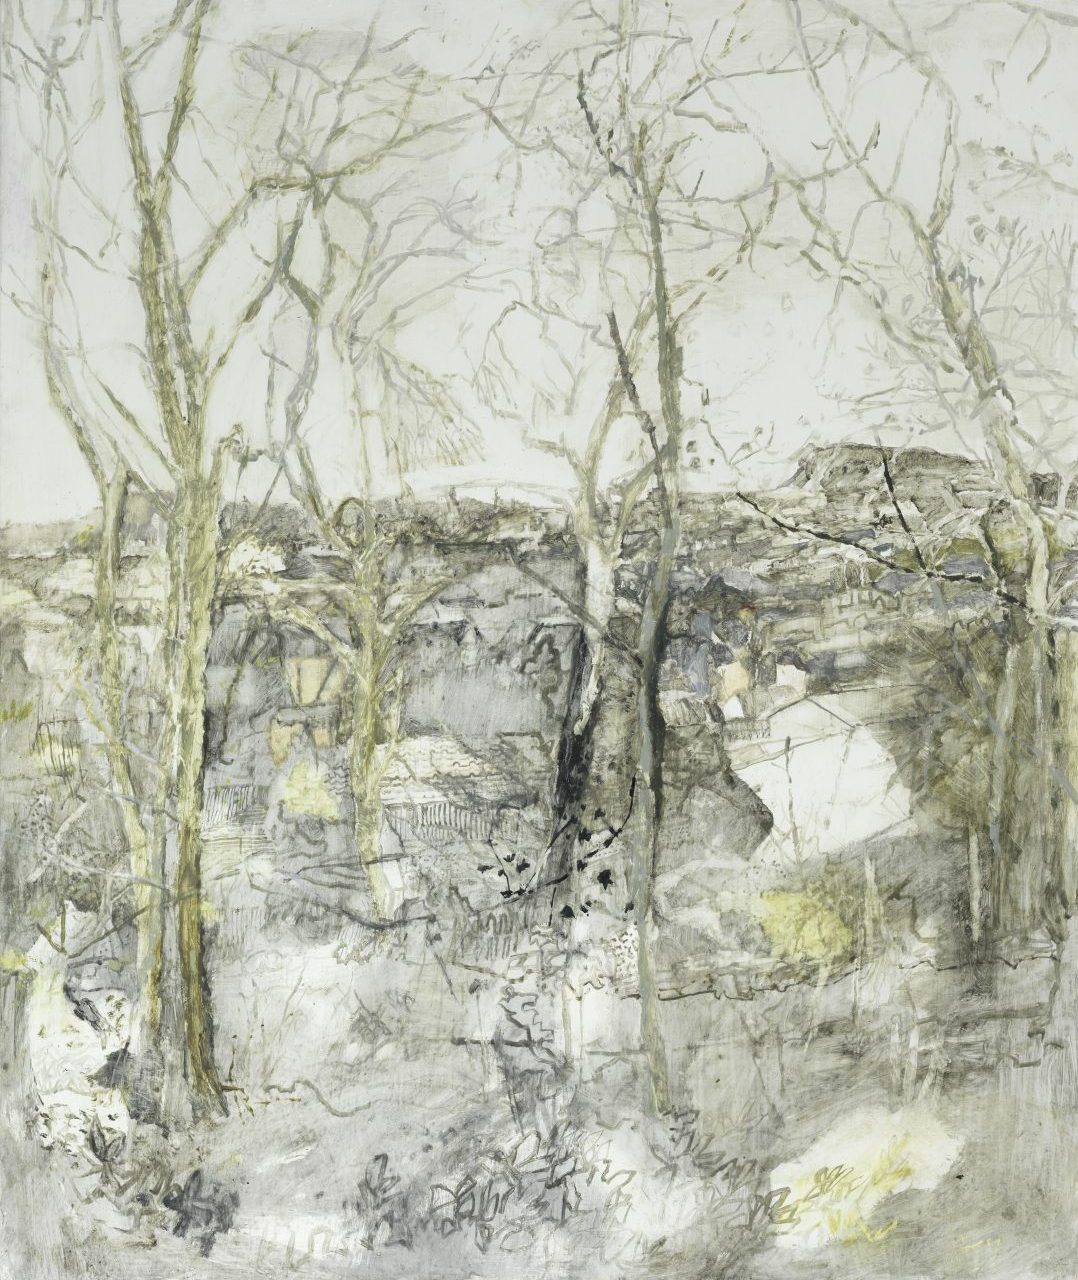 Chasing Shadows, (from Blackford Hill) Catharine Davison Oil on Board, 76 x 63 cm